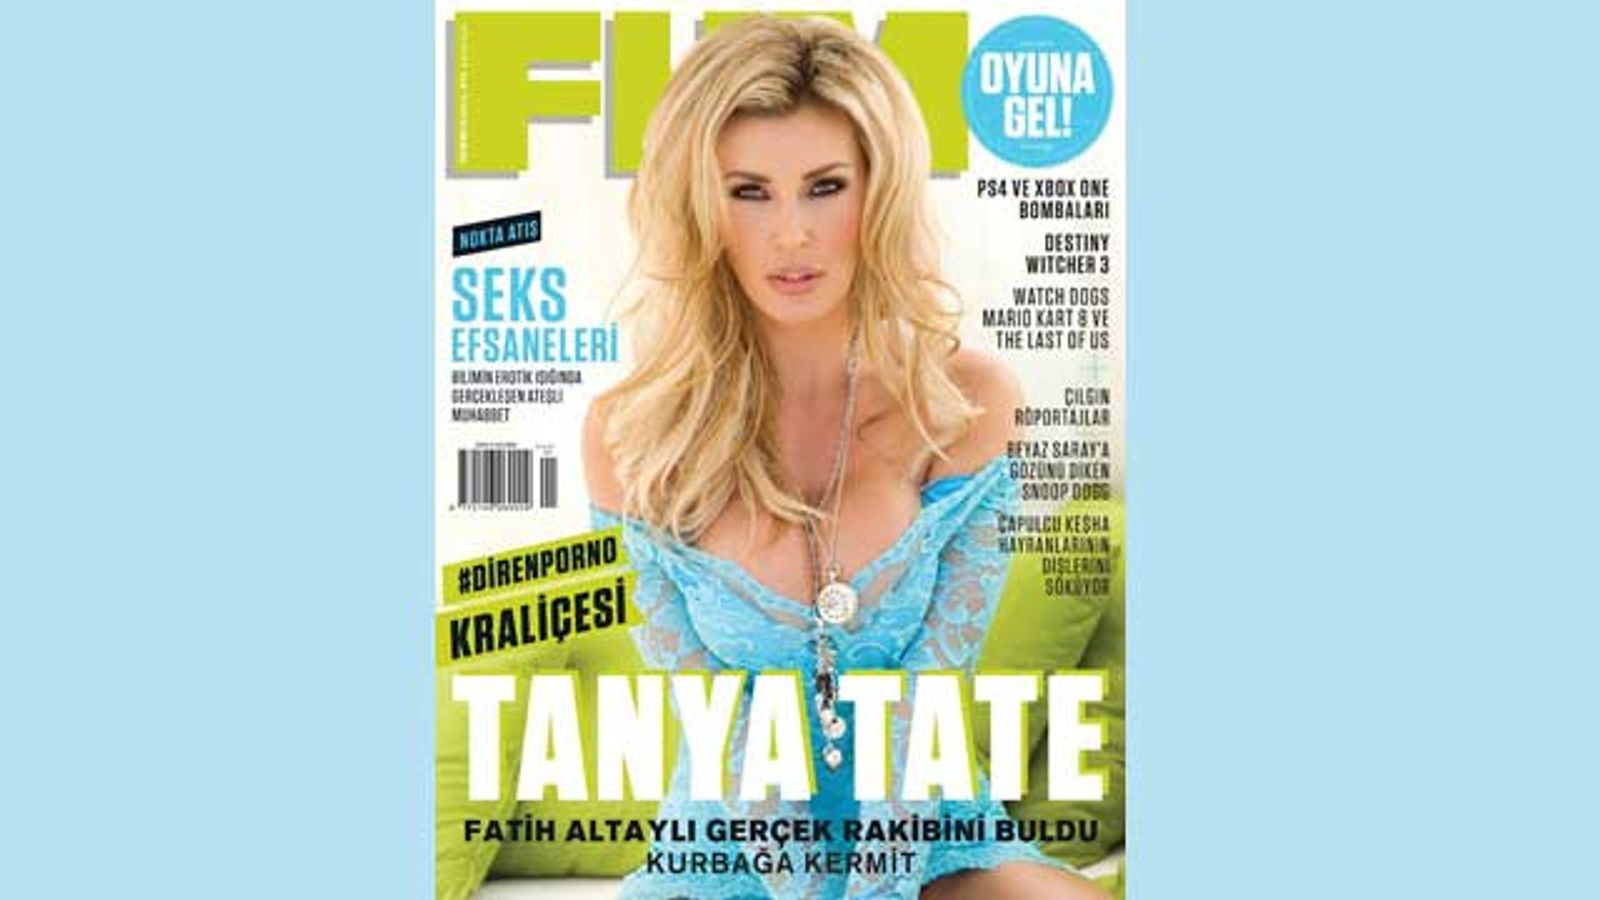 Turkish FHM Magazine Showcases Tanya Tate On Cover